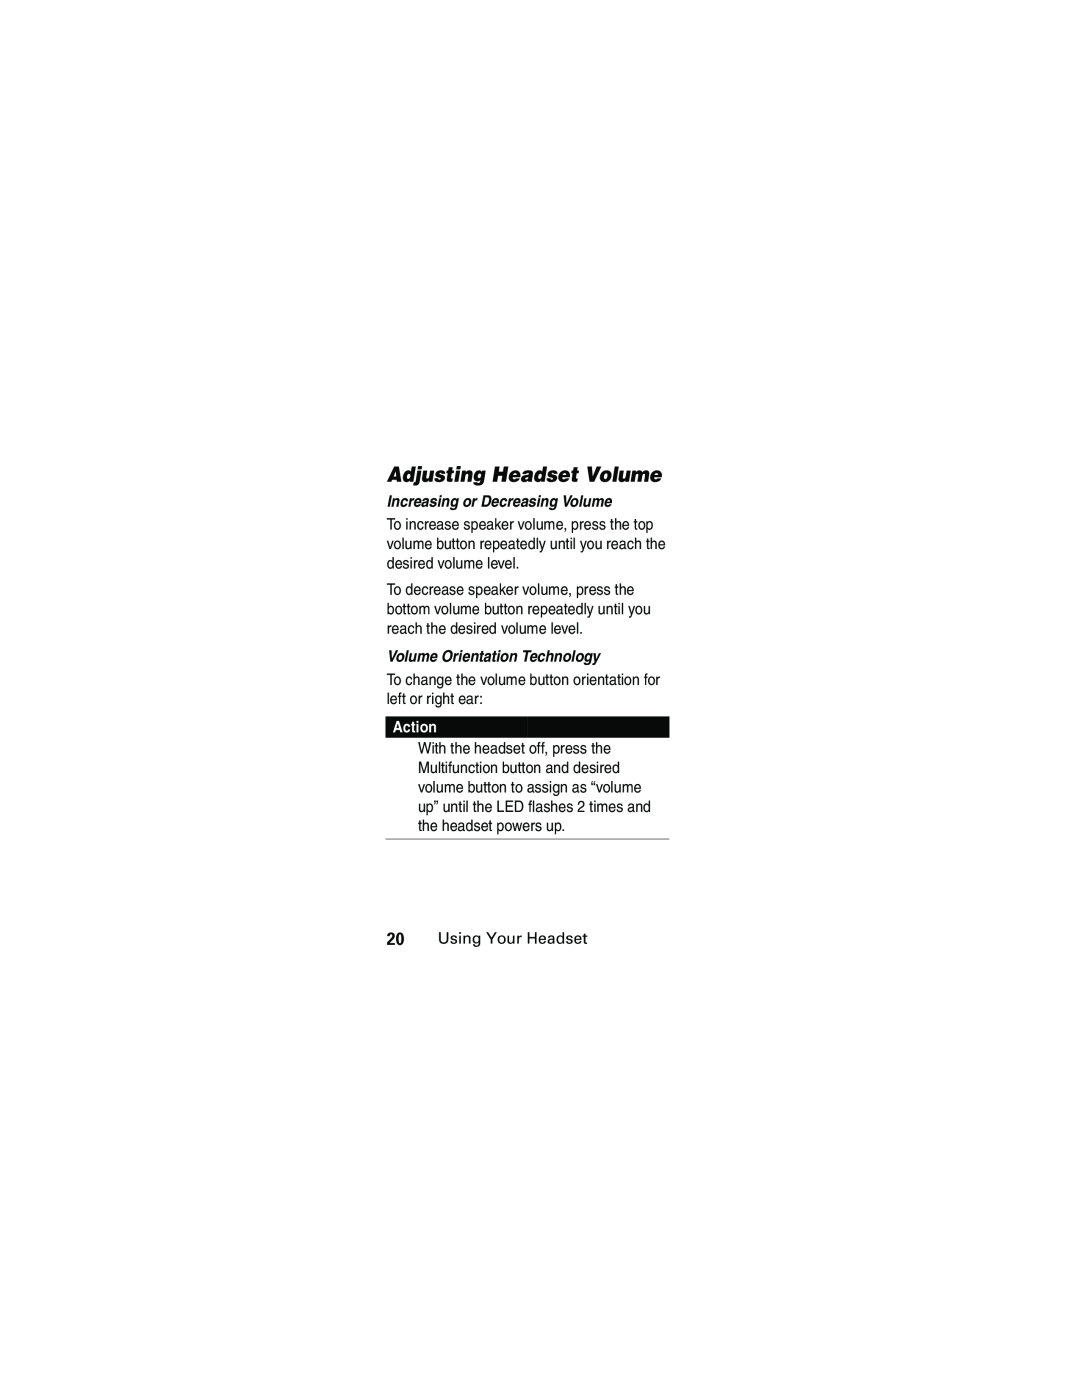 Motorola HS805 manual Adjusting Headset Volume, Increasing or Decreasing Volume, Volume Orientation Technology, Action 